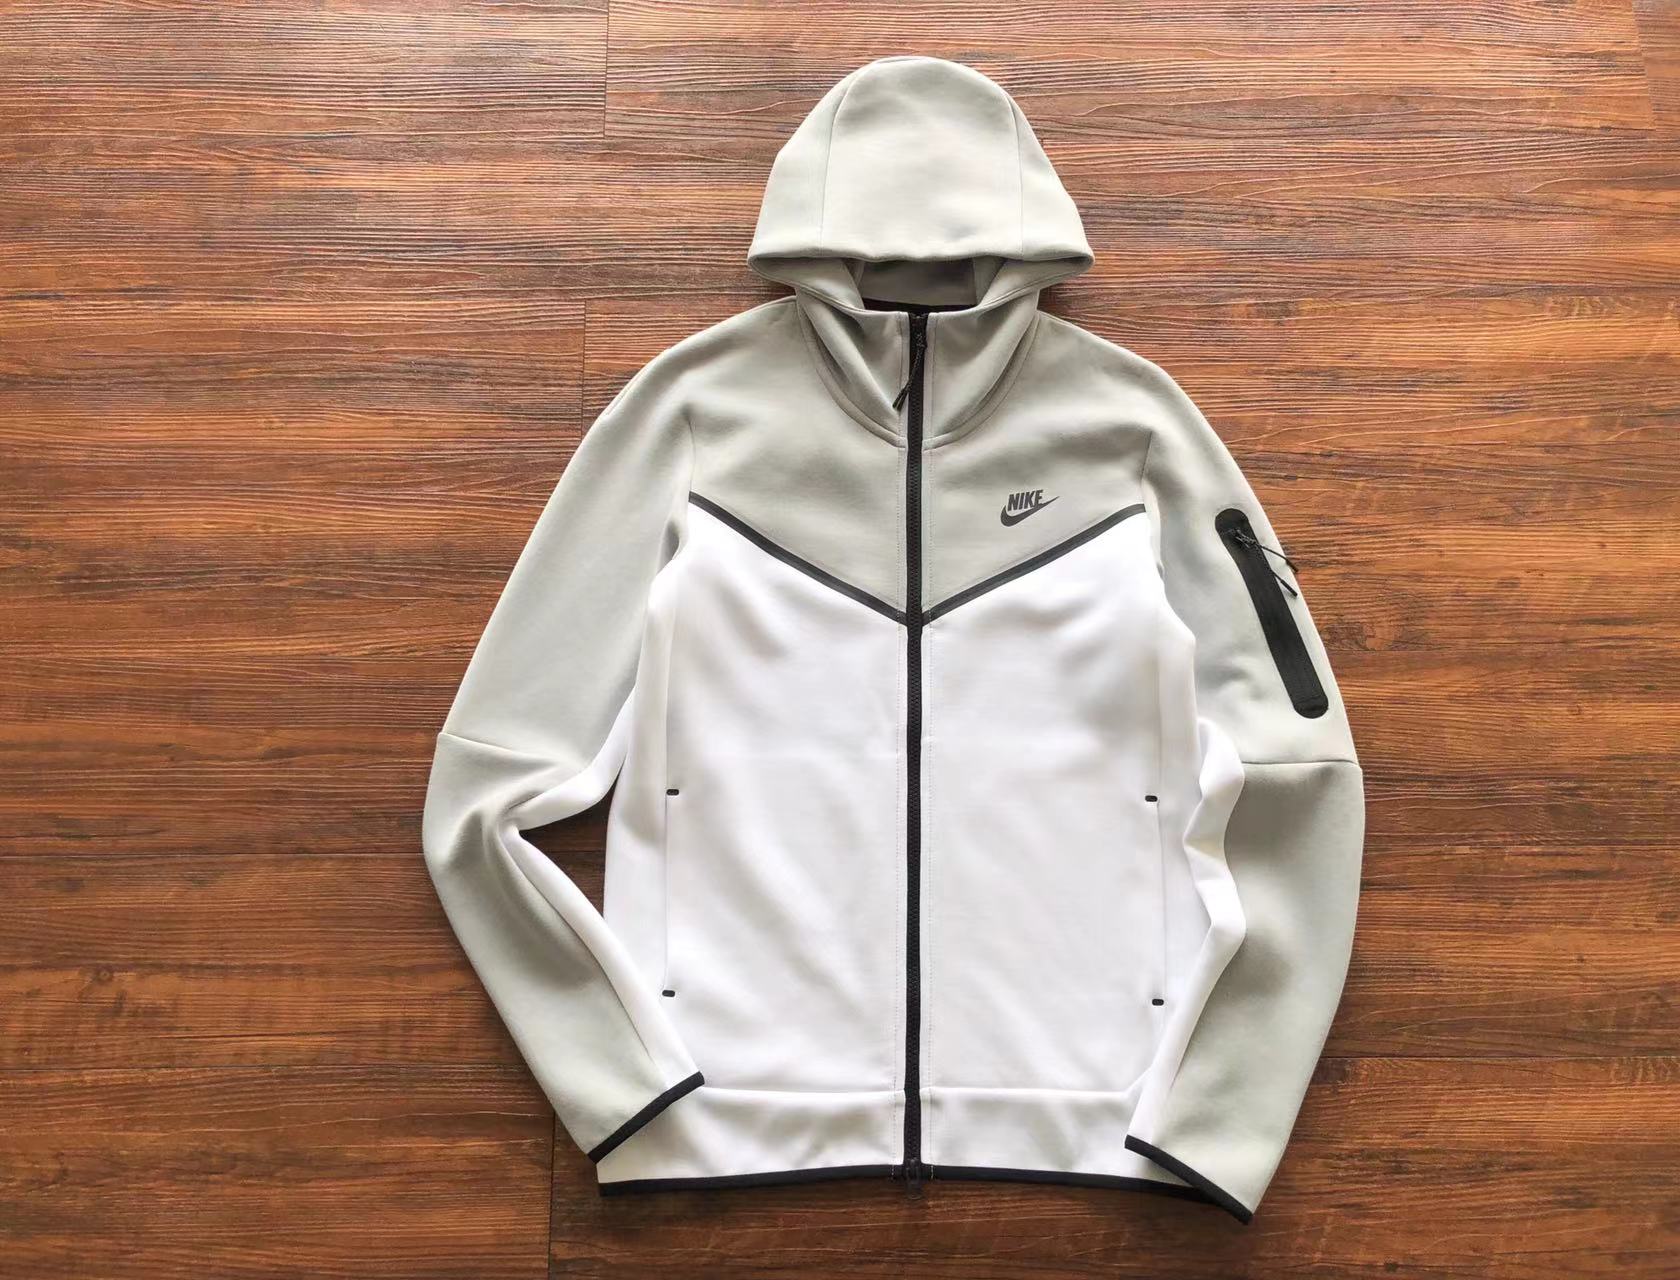 Nike Tech Fleece Branco/Cinza - Conforto e Estilo em um só Conjunto!